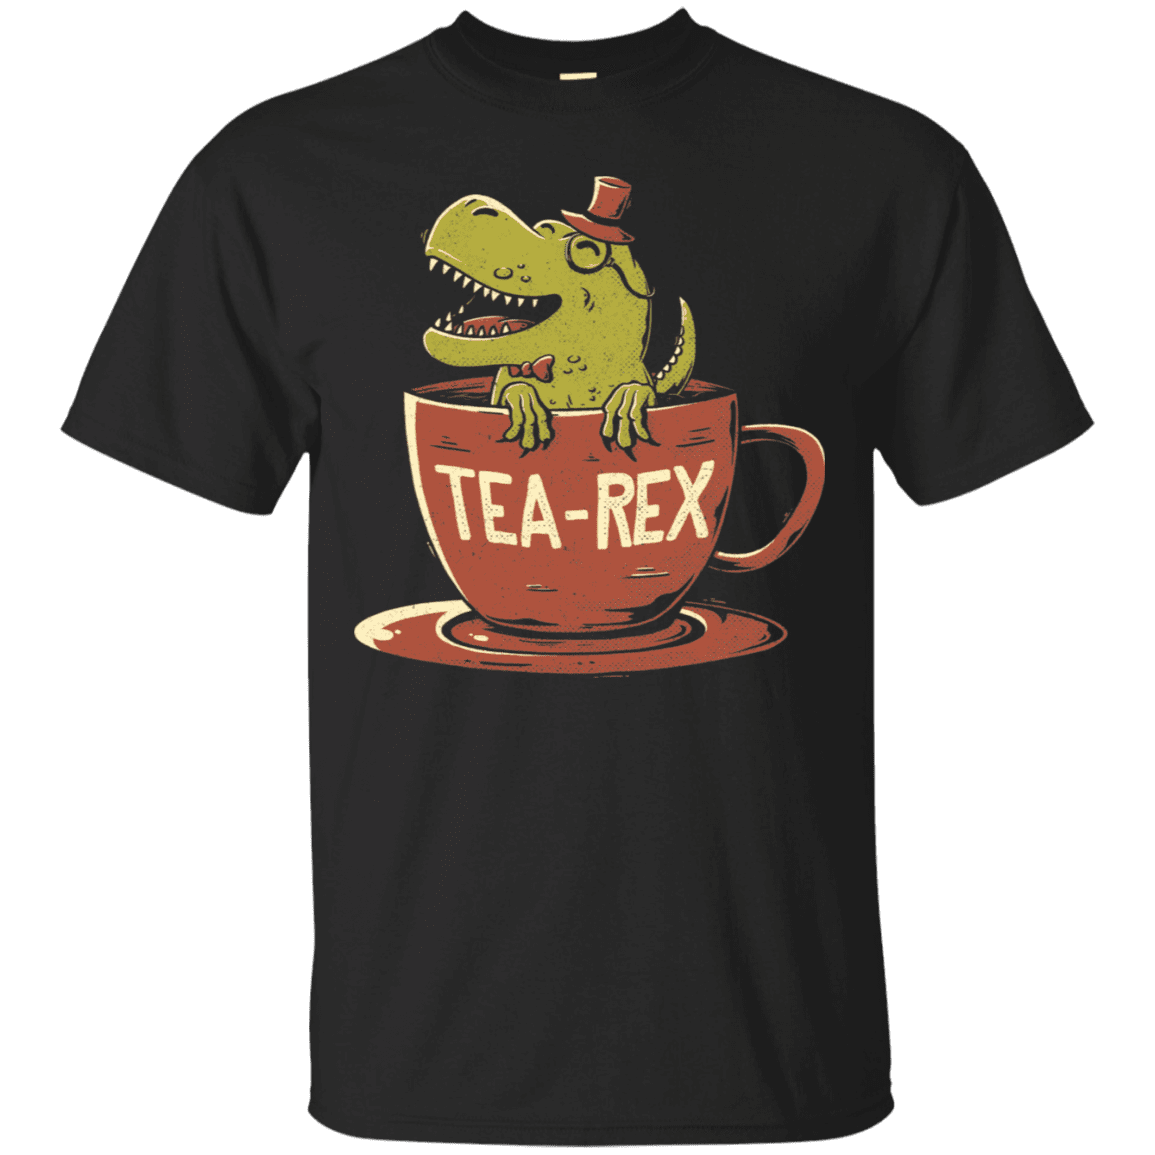 T-Shirts Black / S Tea-Rex T-Shirt